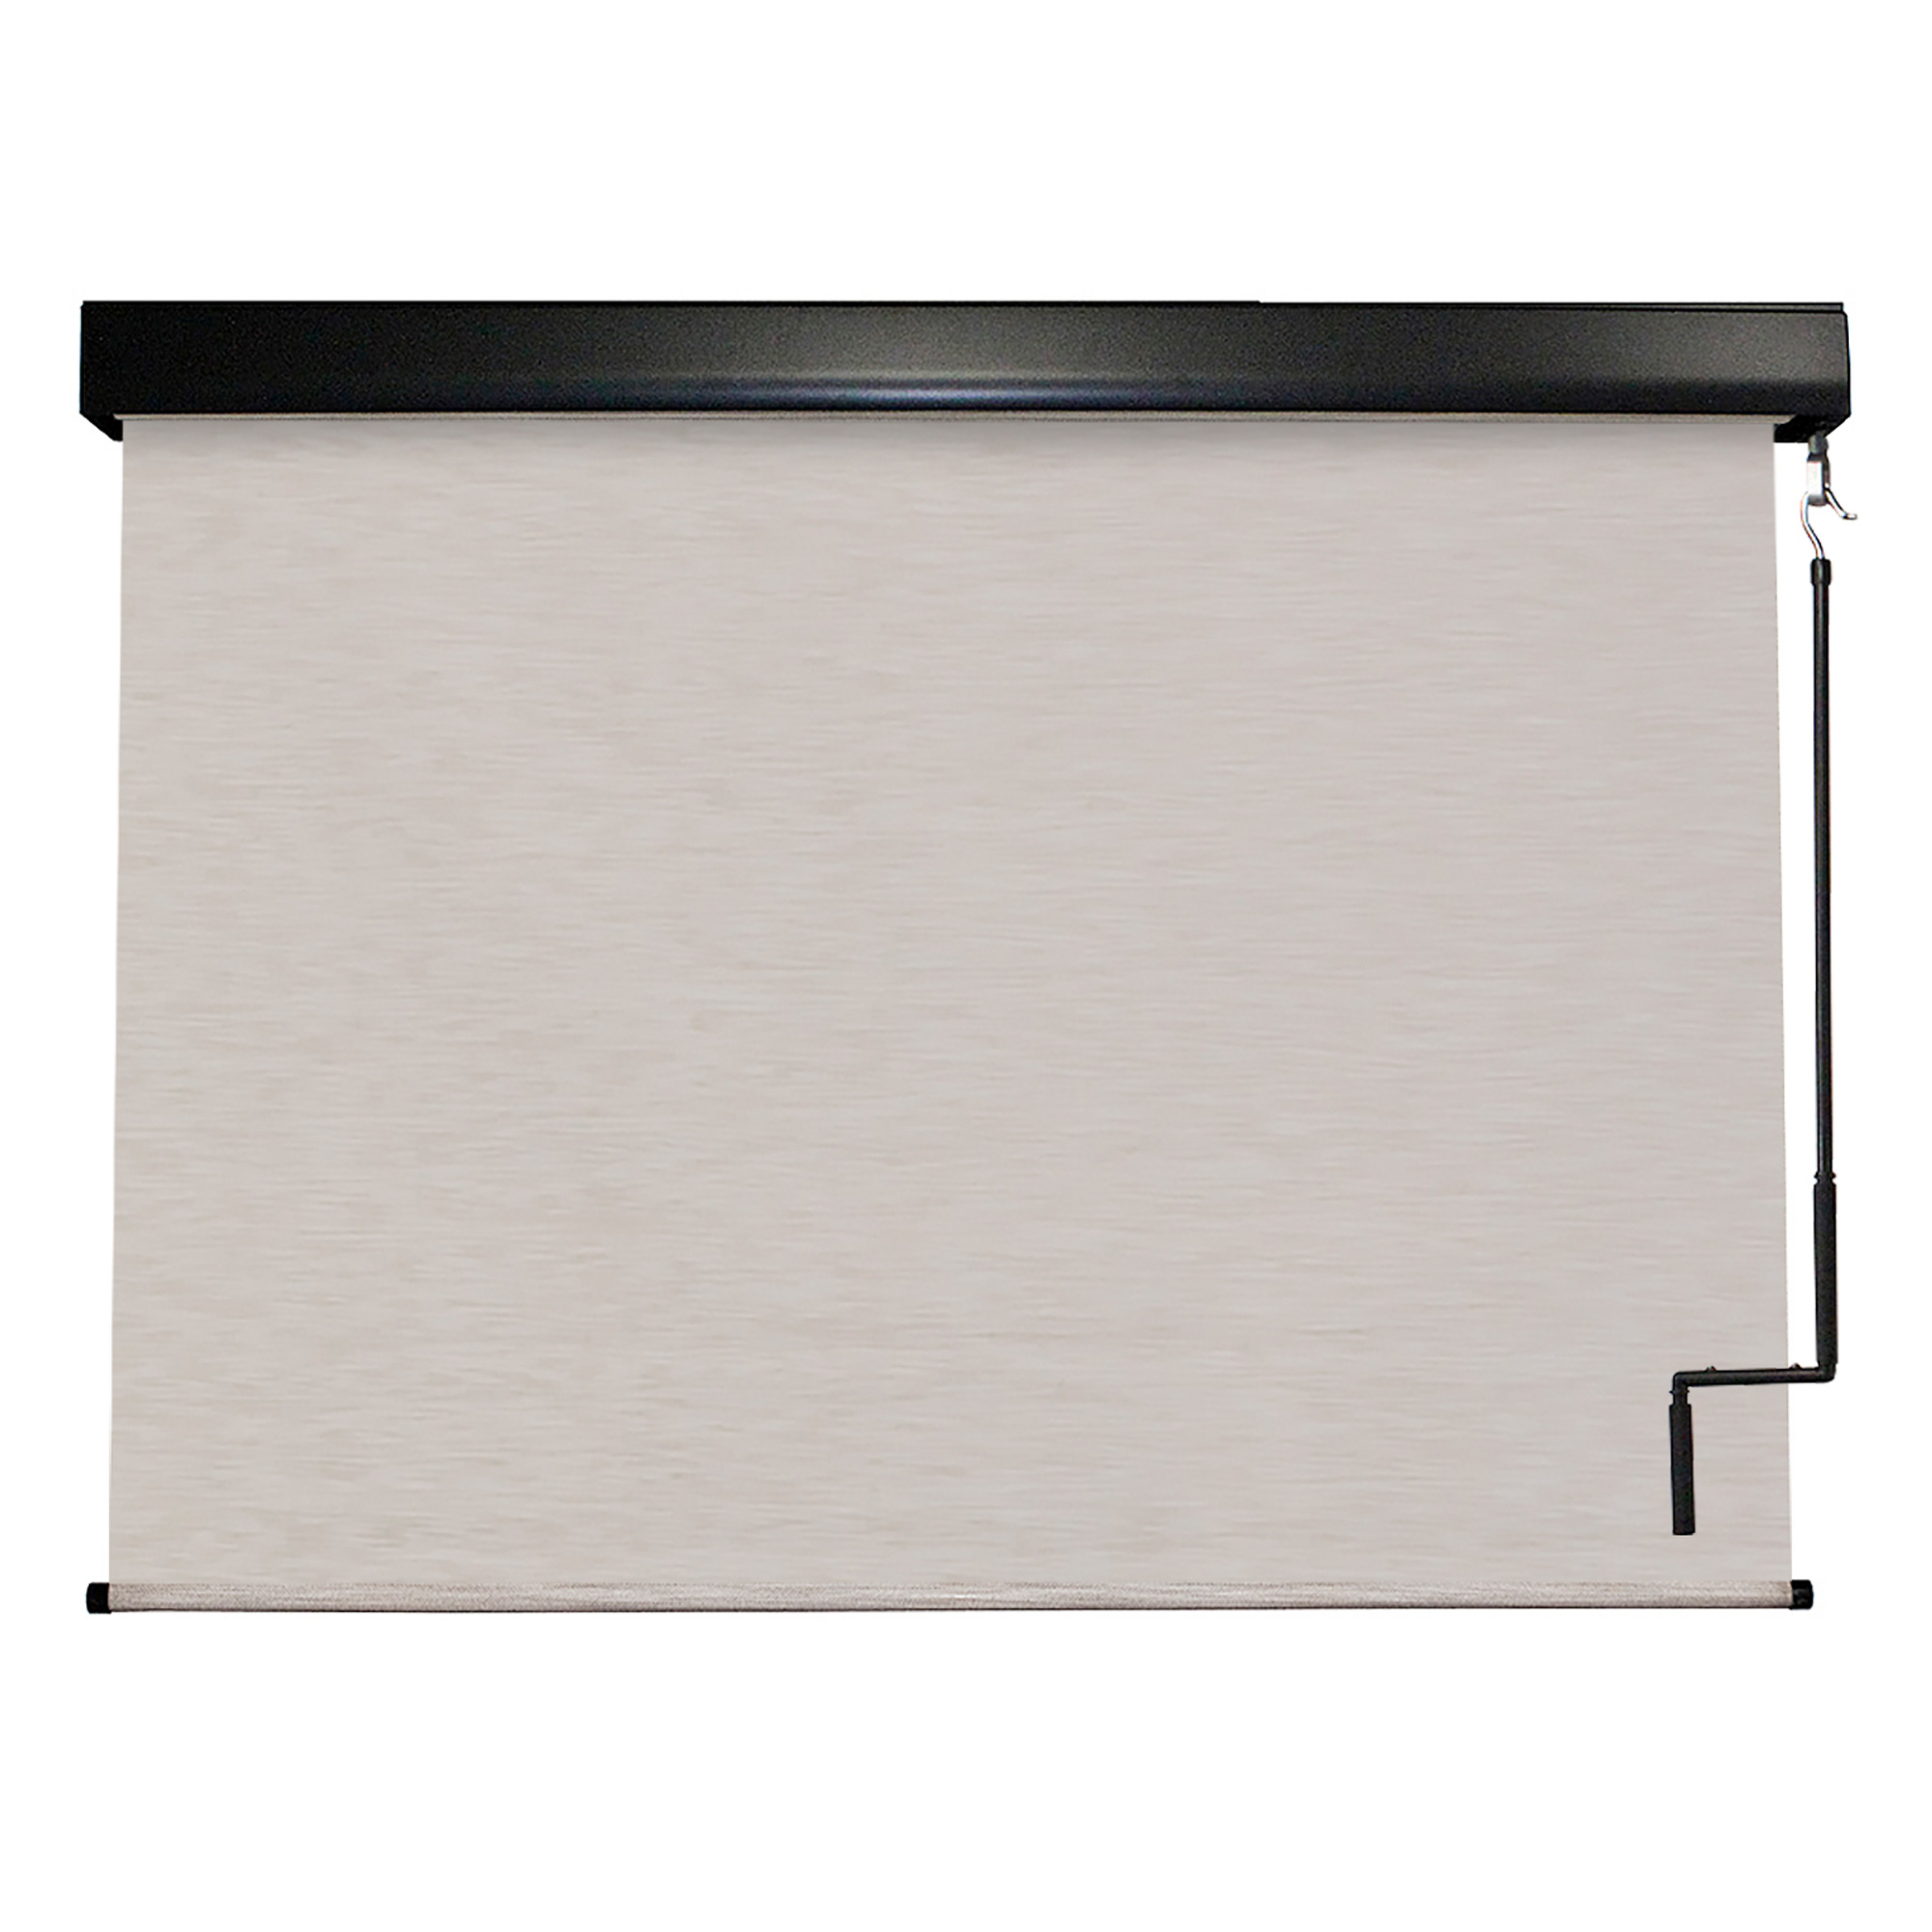 Keystone Fabrics PVC Outdoor Patio Sun Shade with Valance 10ft Wide (White/Tan) - image 1 of 10